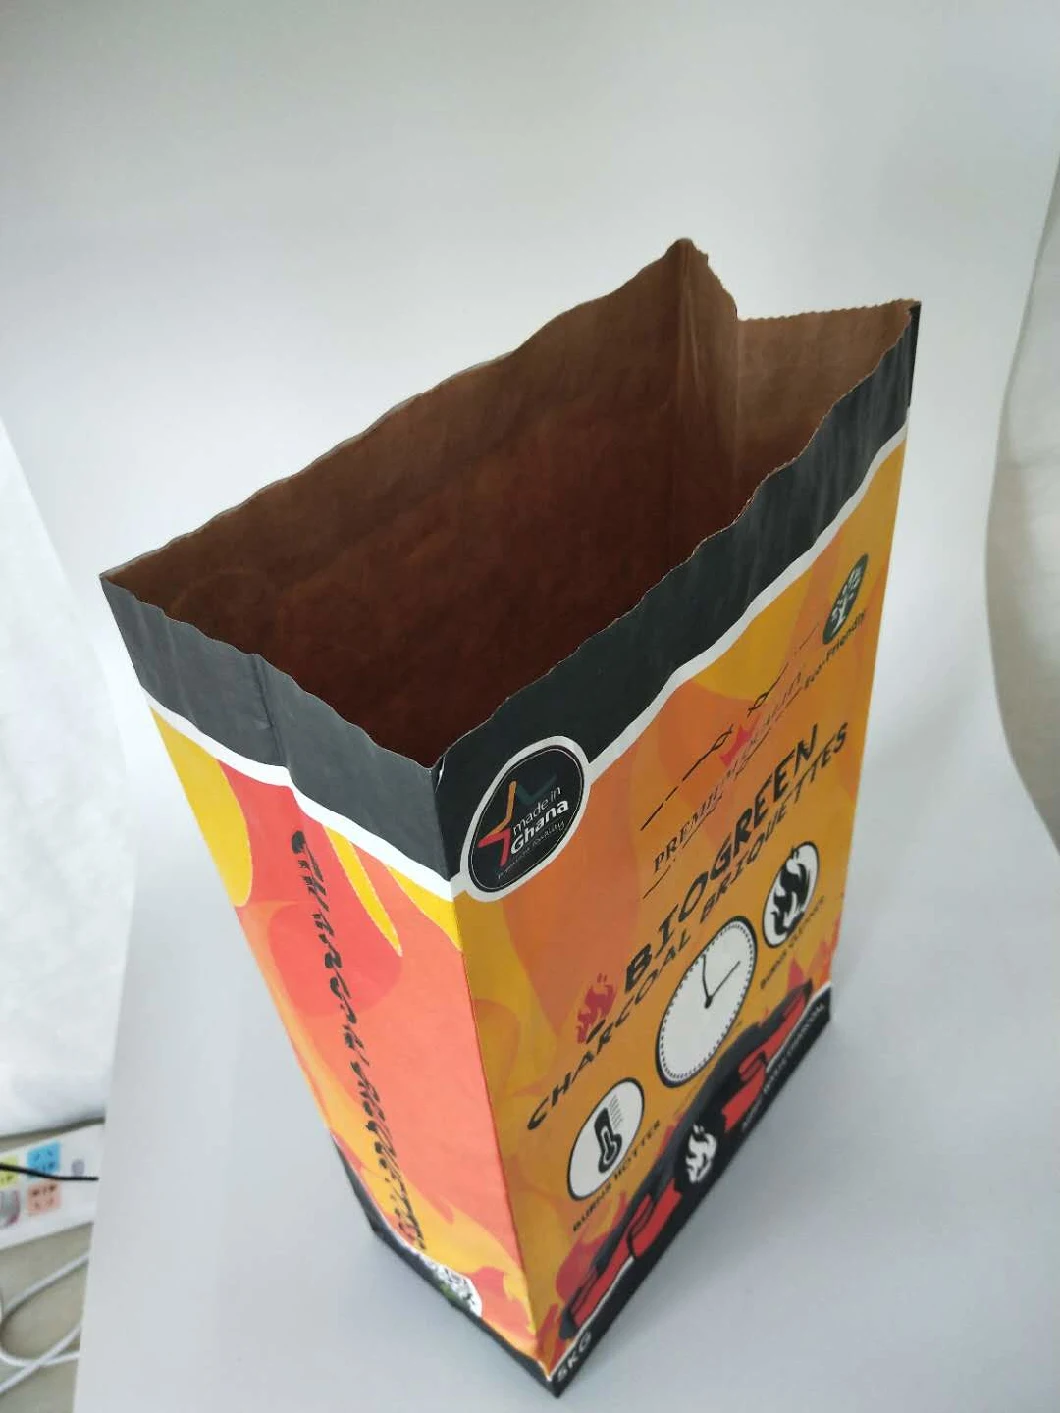 Charcoal Bag 5kg Charcoal Paper Bag